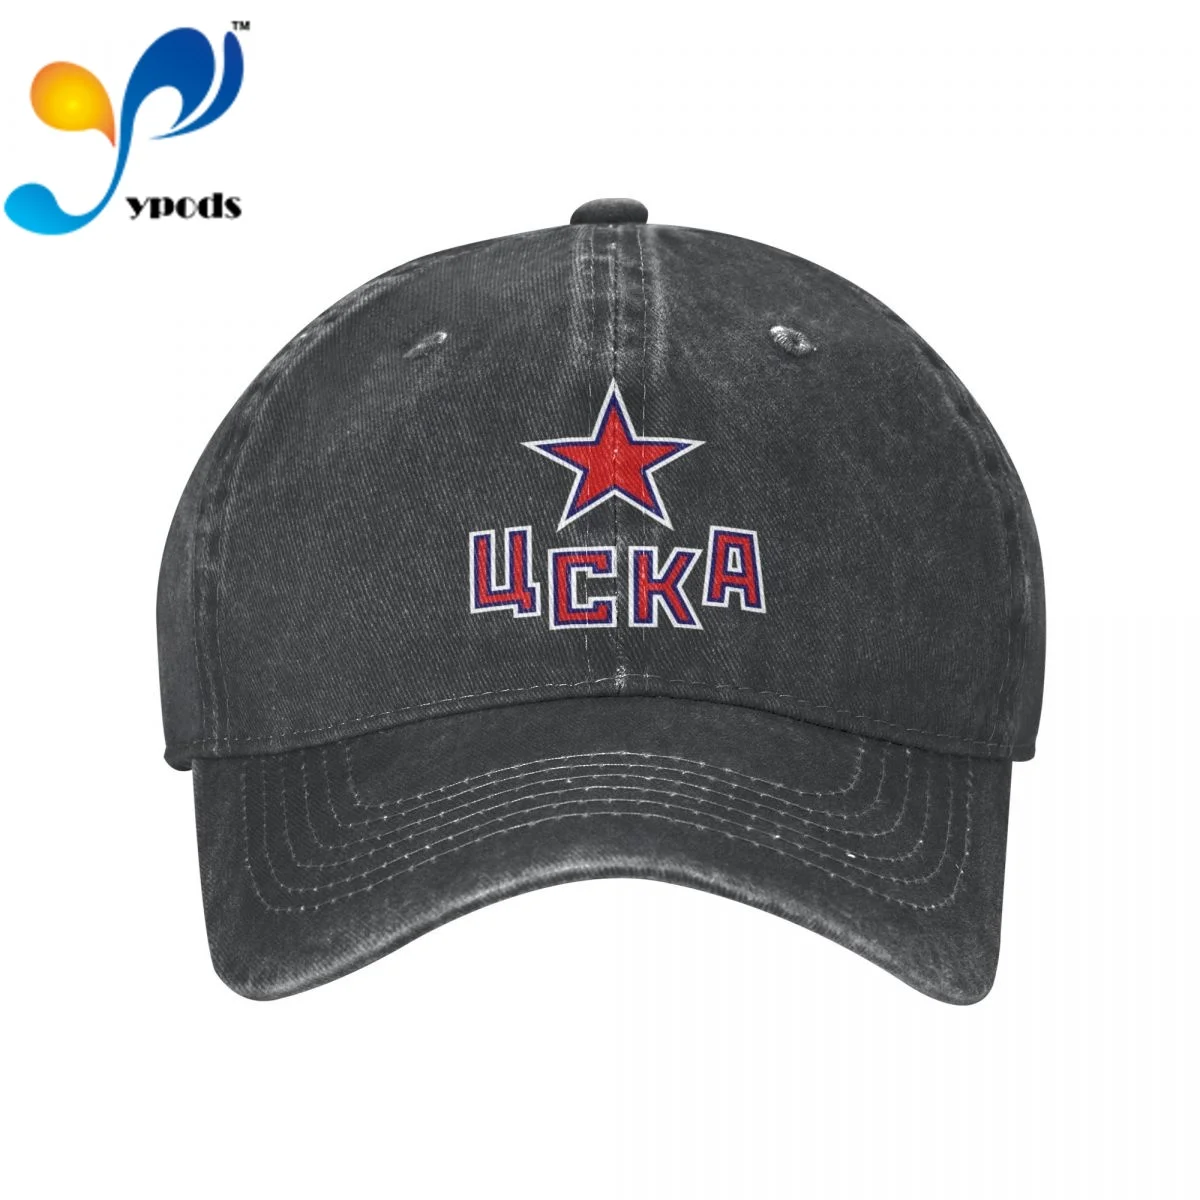 

Hc Cska Moscow Khl Russian Professional Hockeyer Black Russia Women Men Cotton Baseball Cap Unisex Casual Caps Snapback Hats